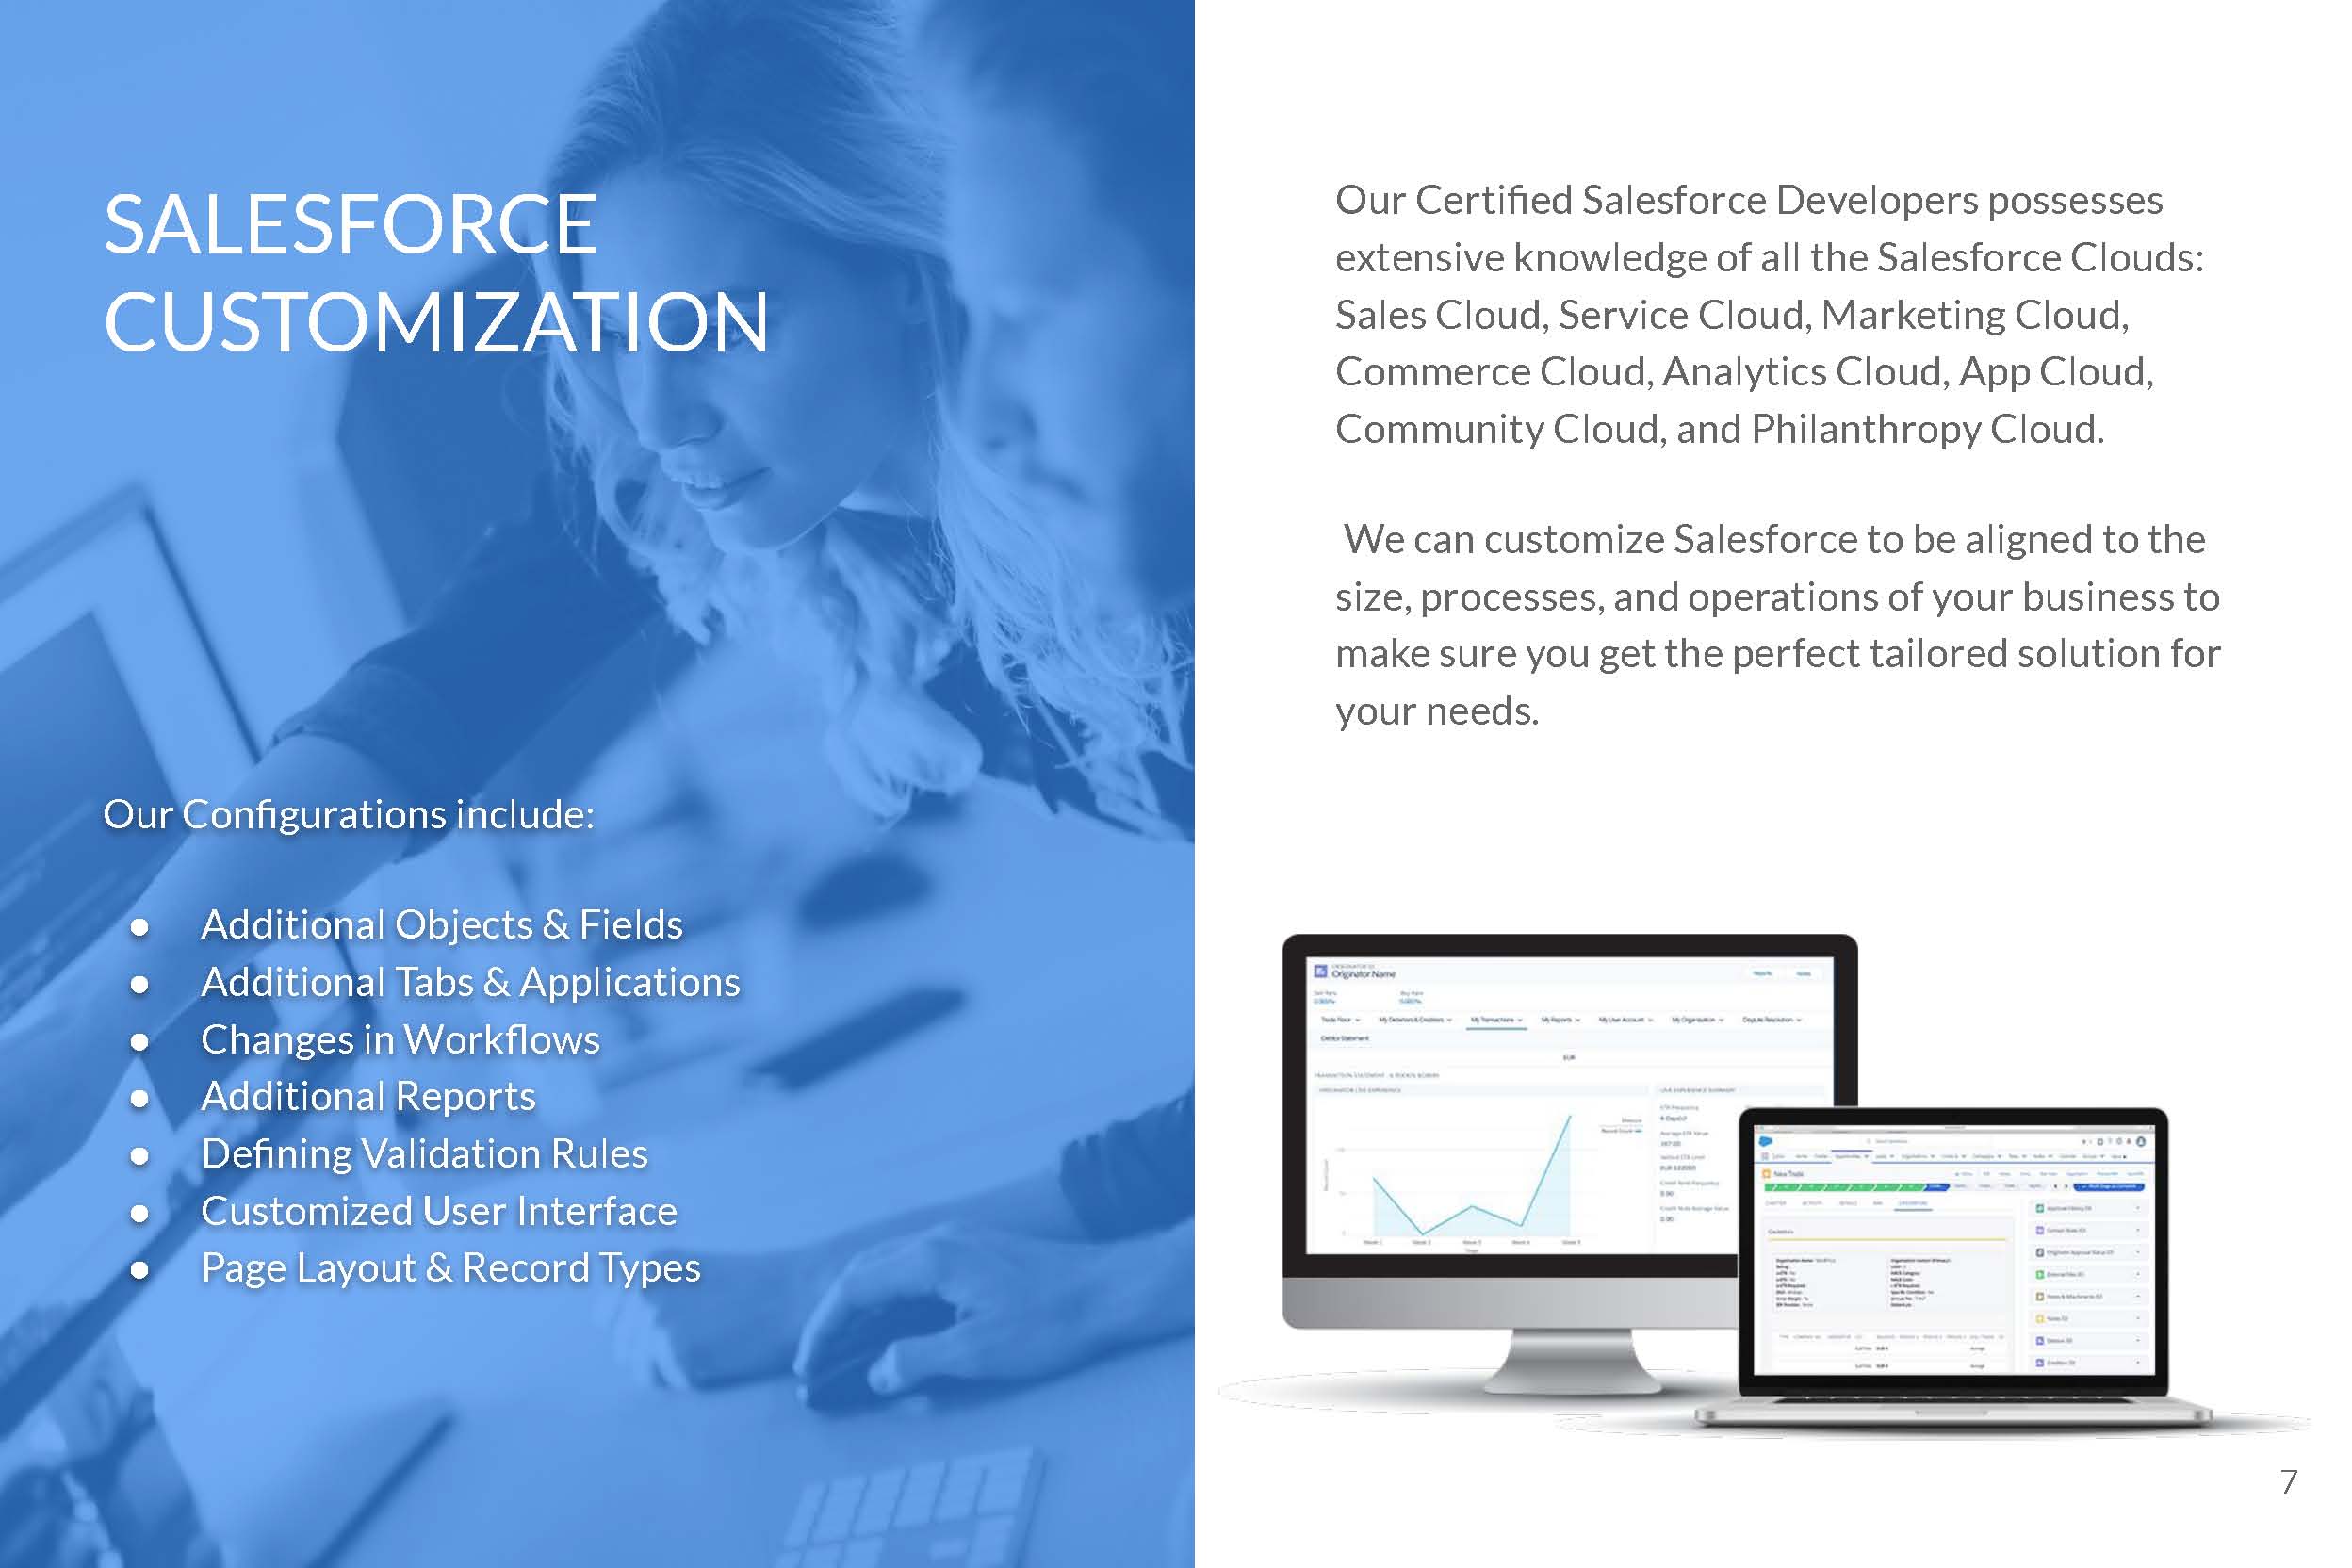 Portfolio salesforce customization